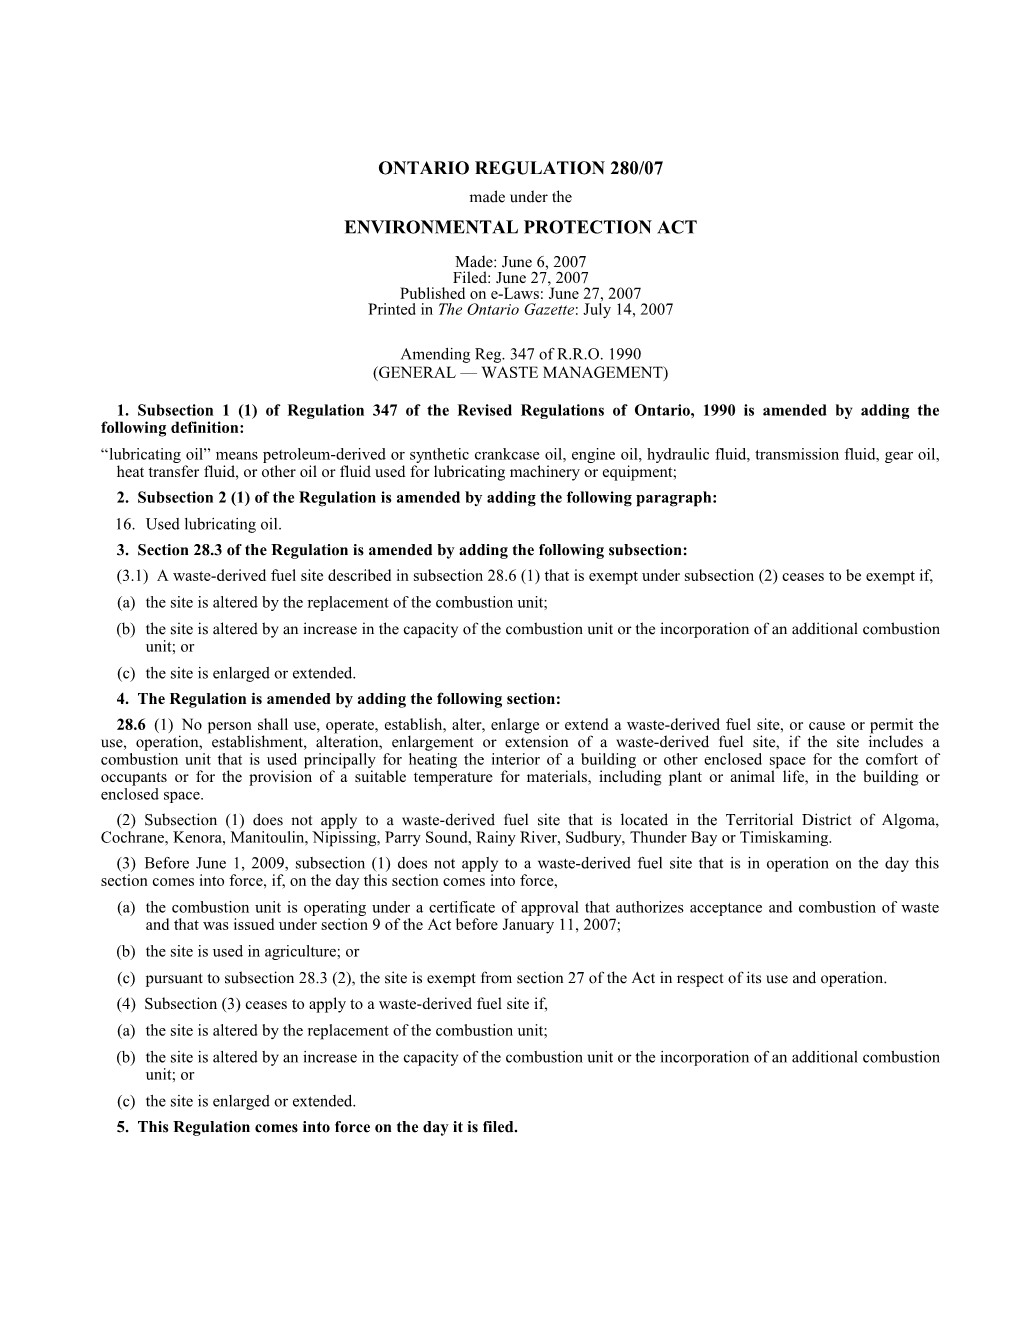 ENVIRONMENTAL PROTECTION ACT - O. Reg. 280/07